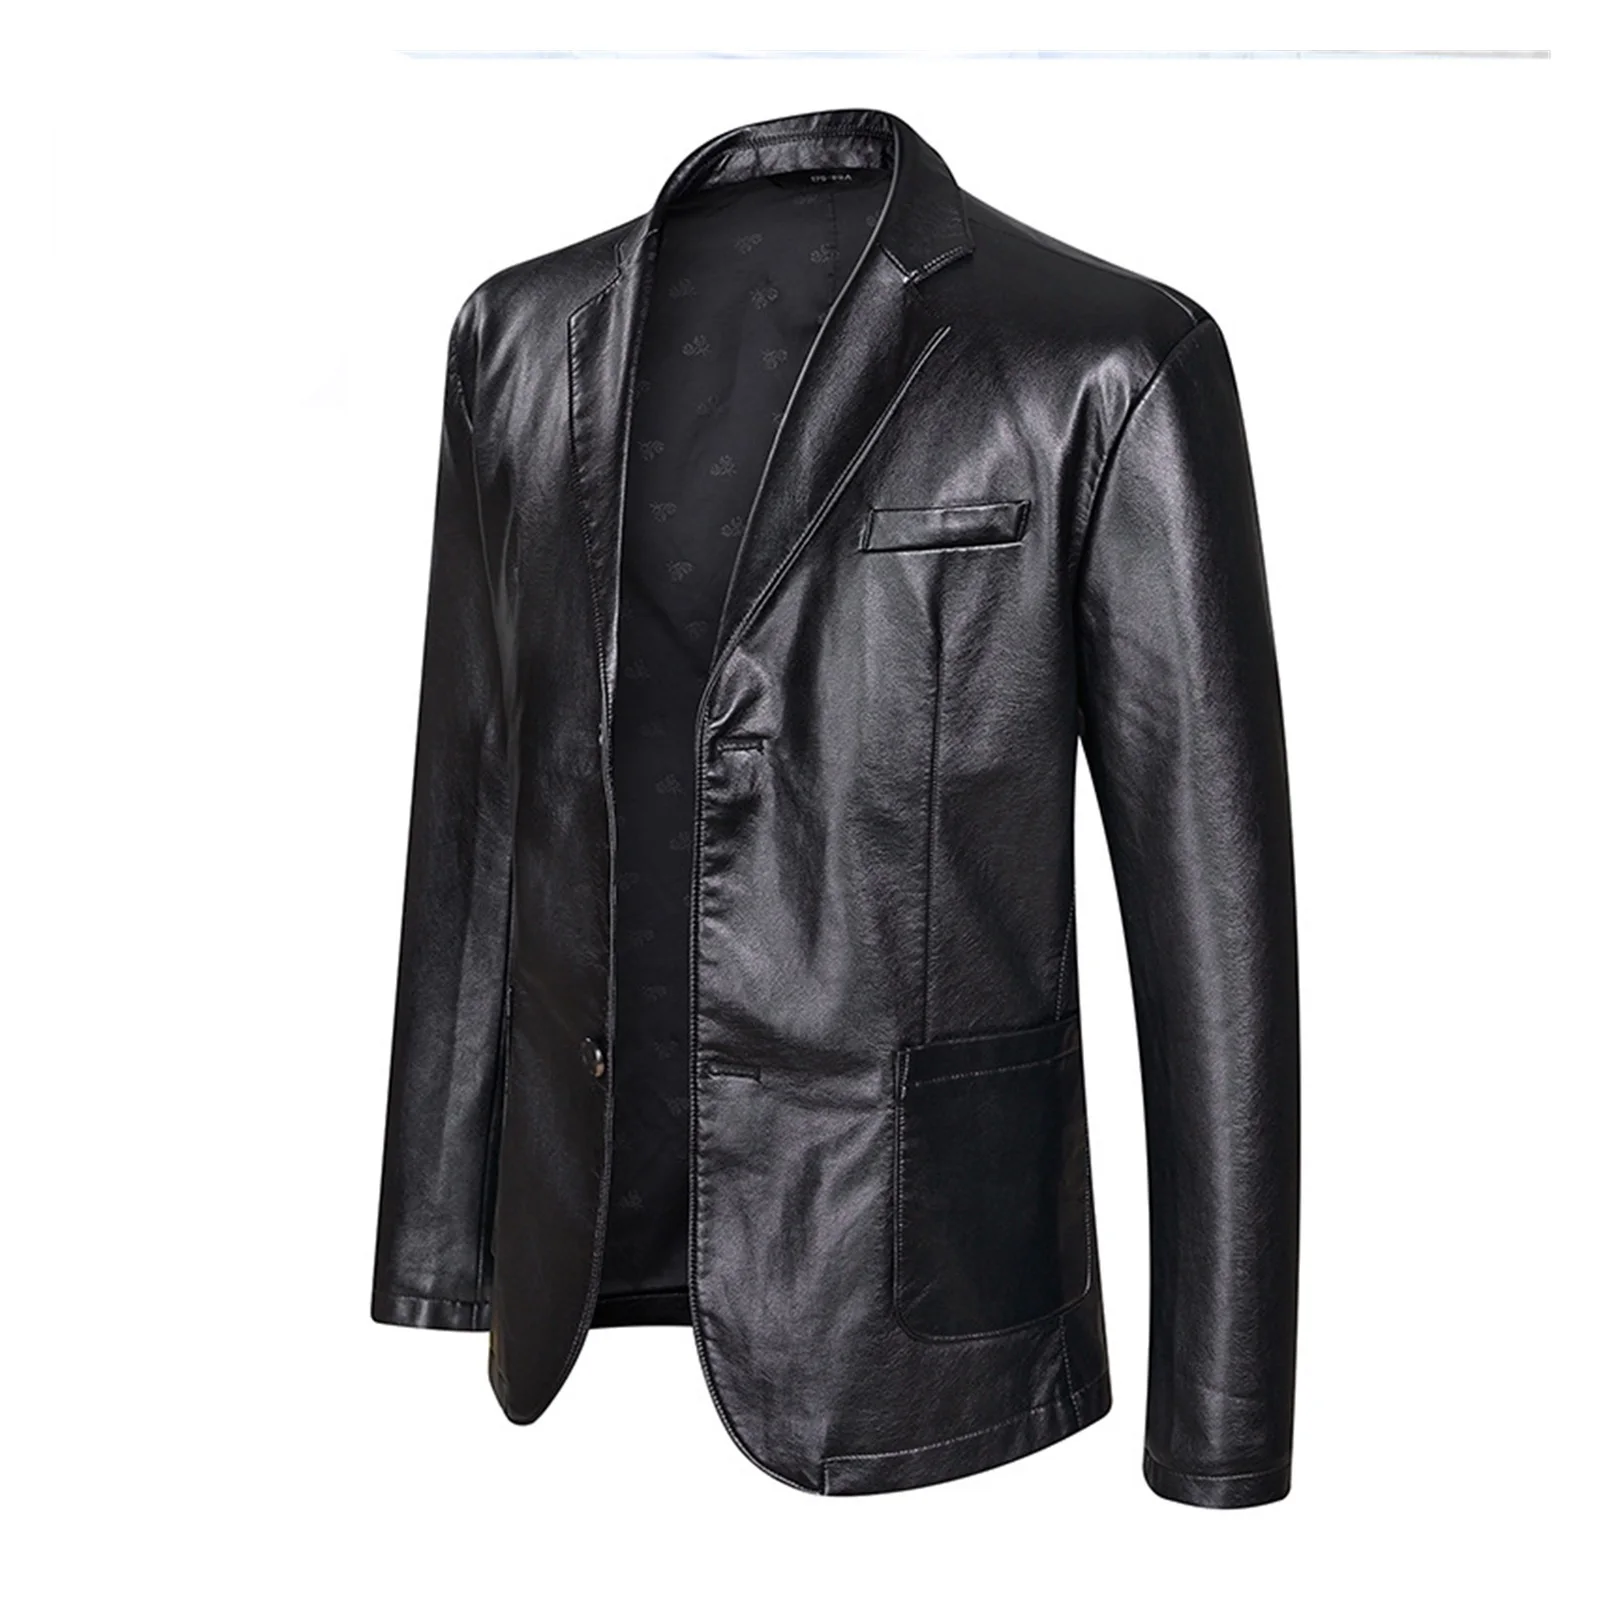 

2021NEW New Fashion Leather Jackets Men's Jacket Button Outwear Men's Coats 2021 Spring Autumn PU Jacket Coat Plus Size 5XL 6XL